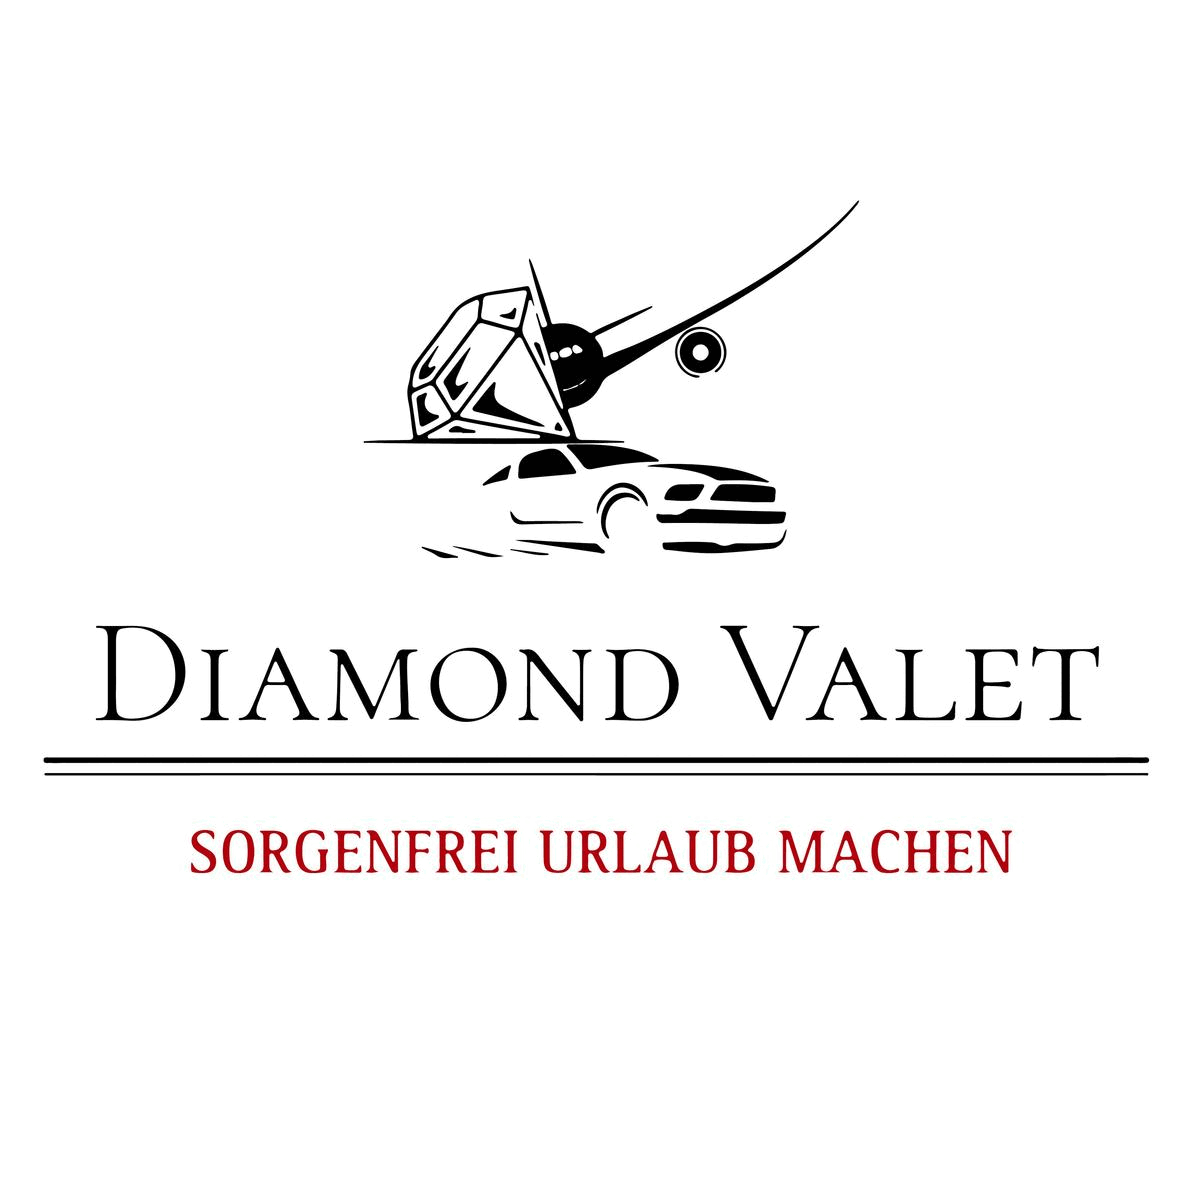 DiamondValet Frankfurt am Main